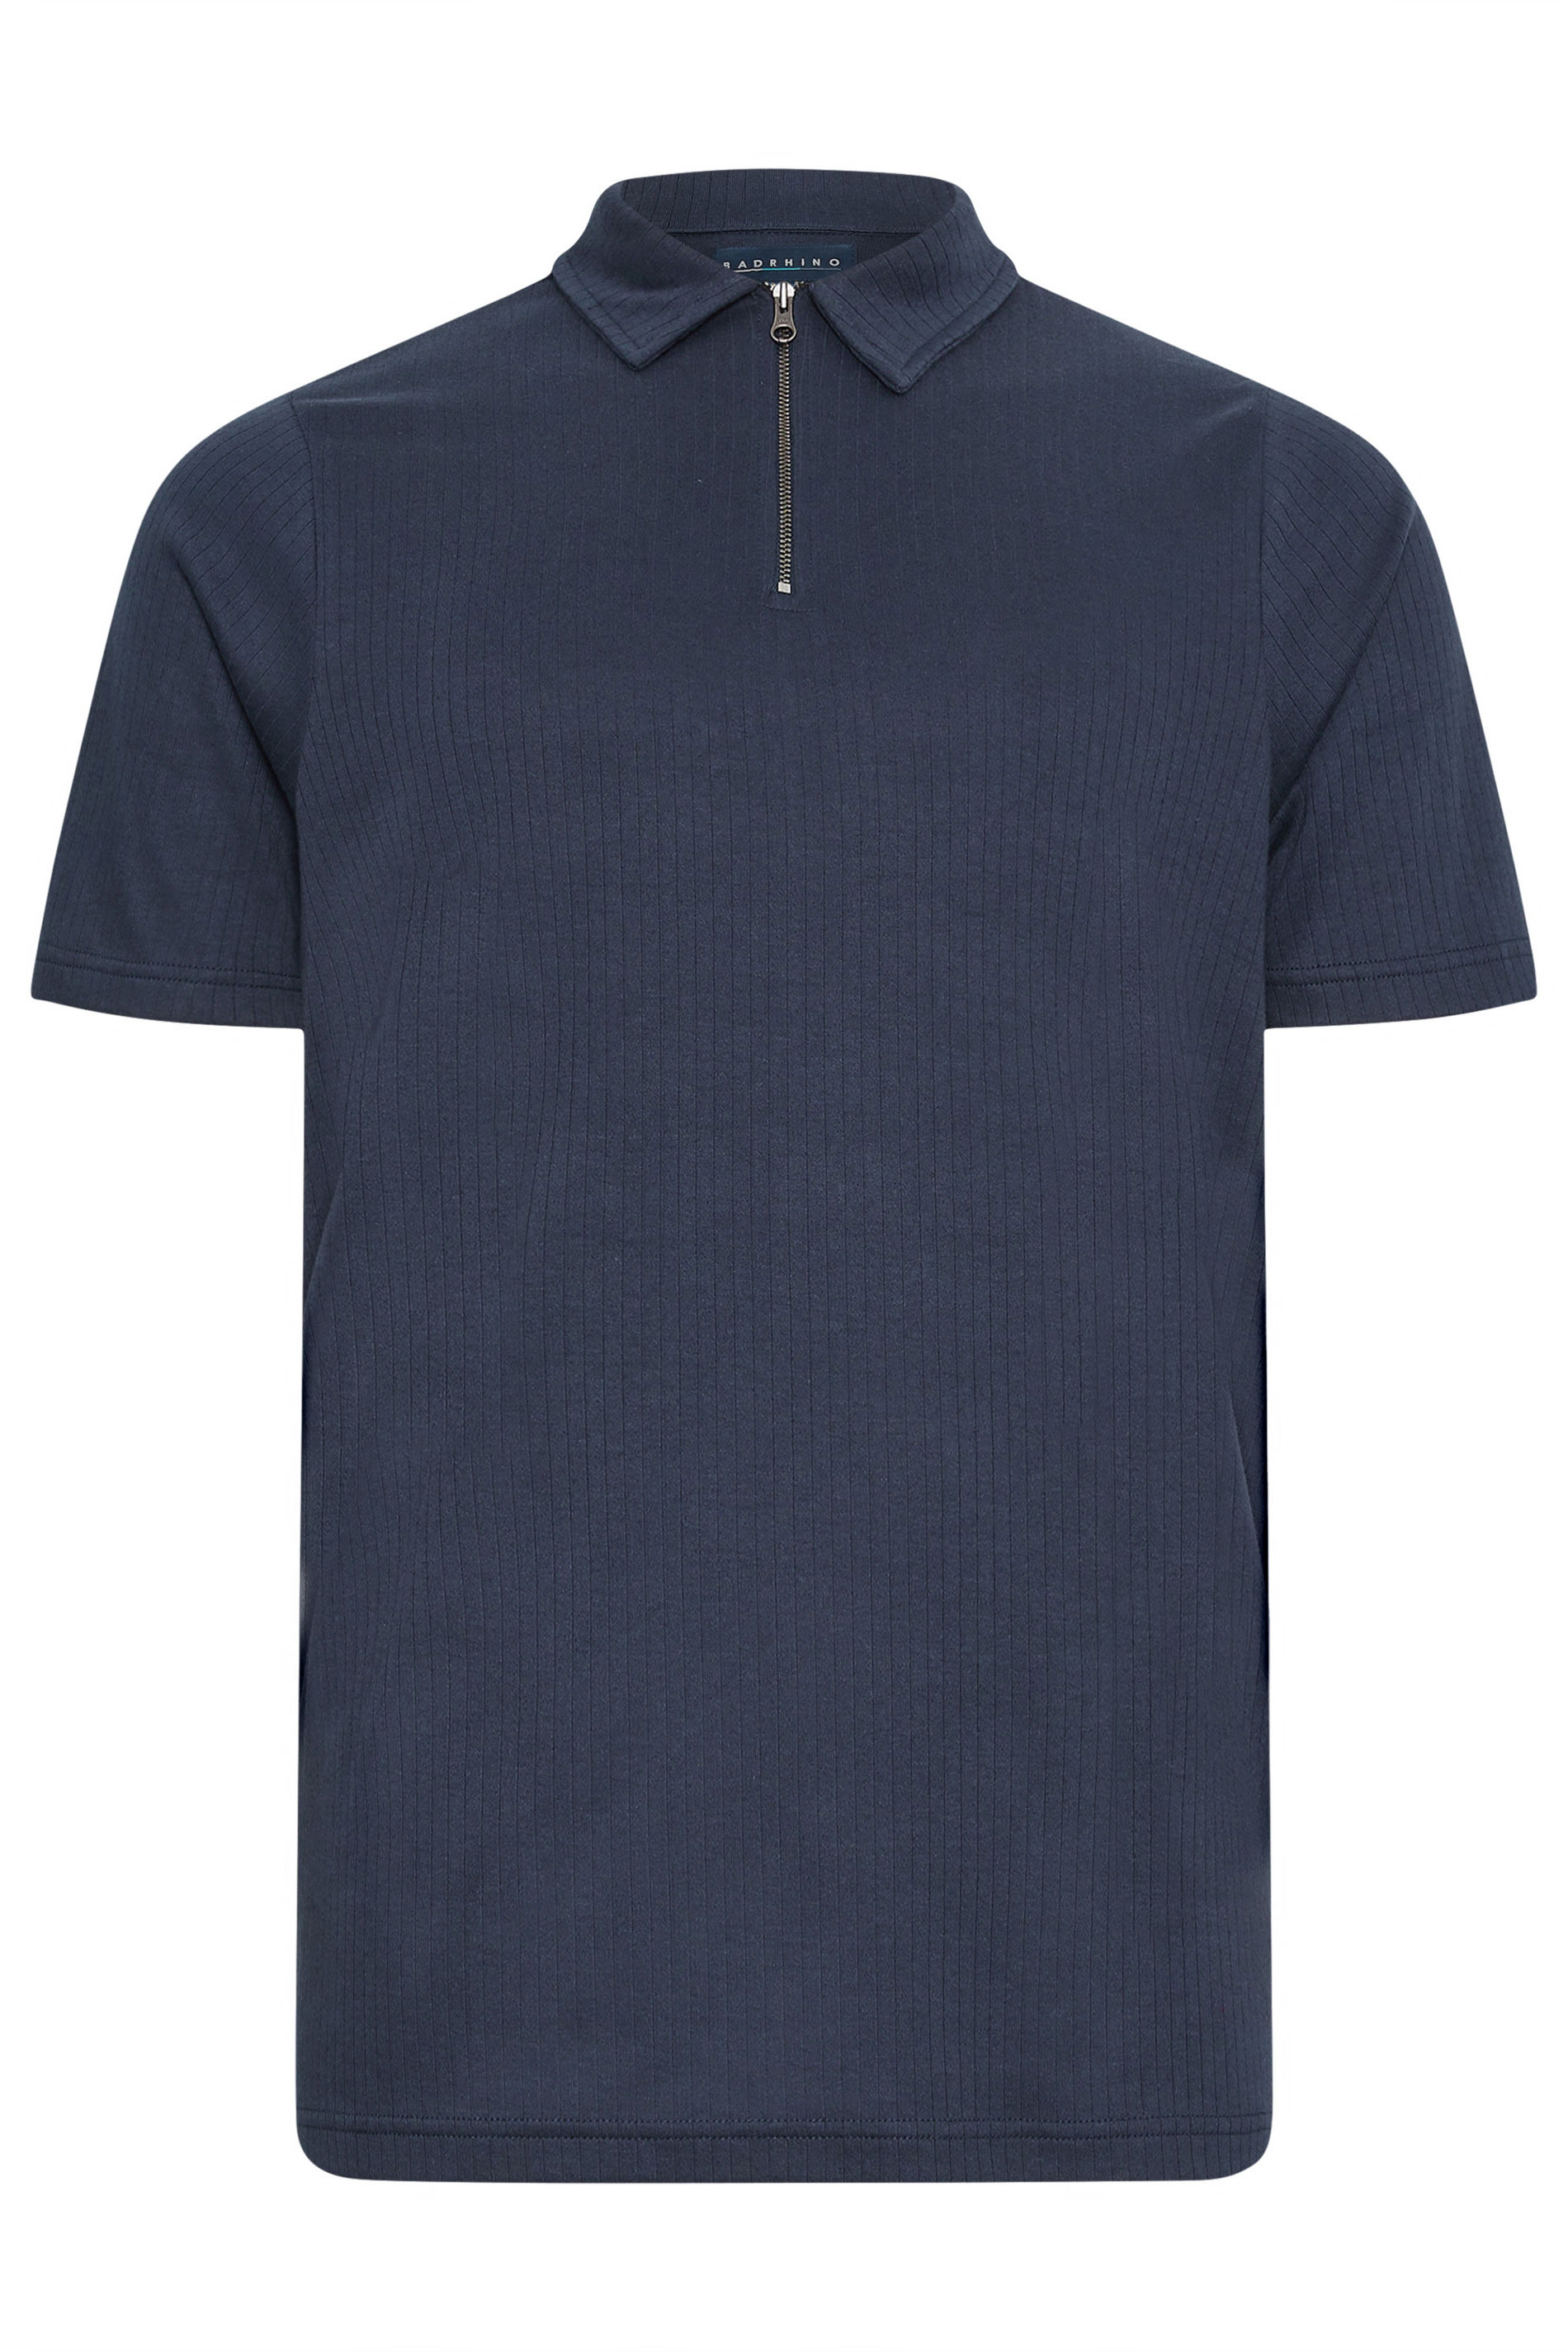 BadRhino Big & Tall Navy Blue Jacquard Zip Neck Polo Shirt | BadRhino 3